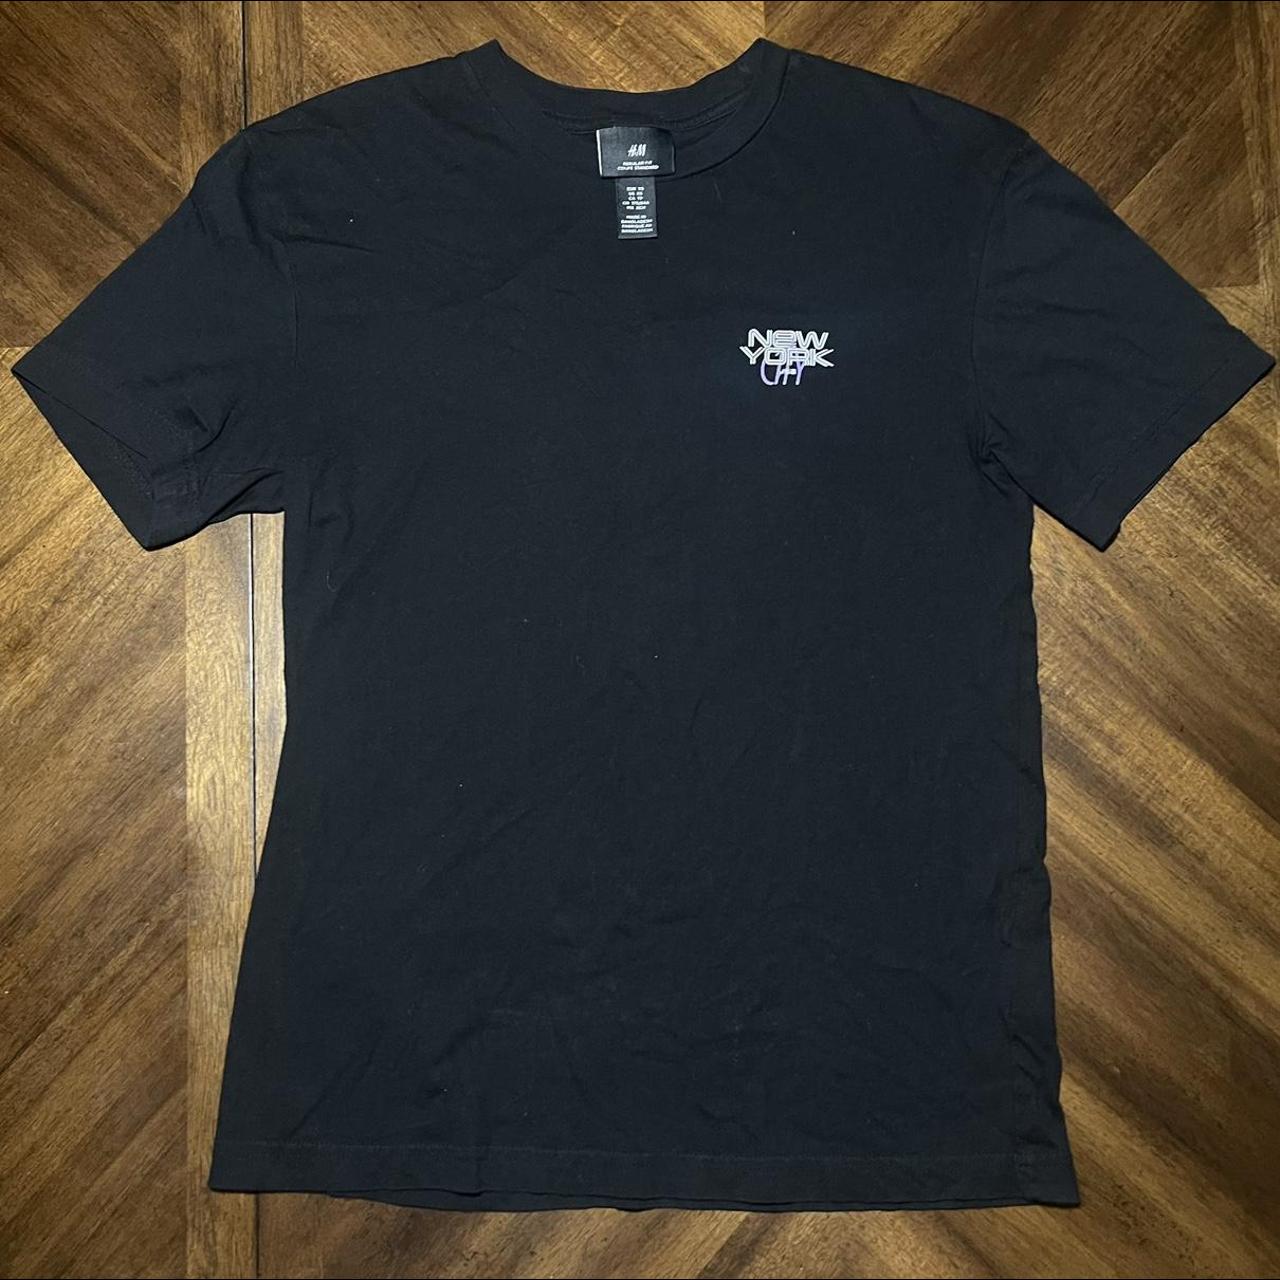 H&M Black New York City Shirt! - willing to... - Depop